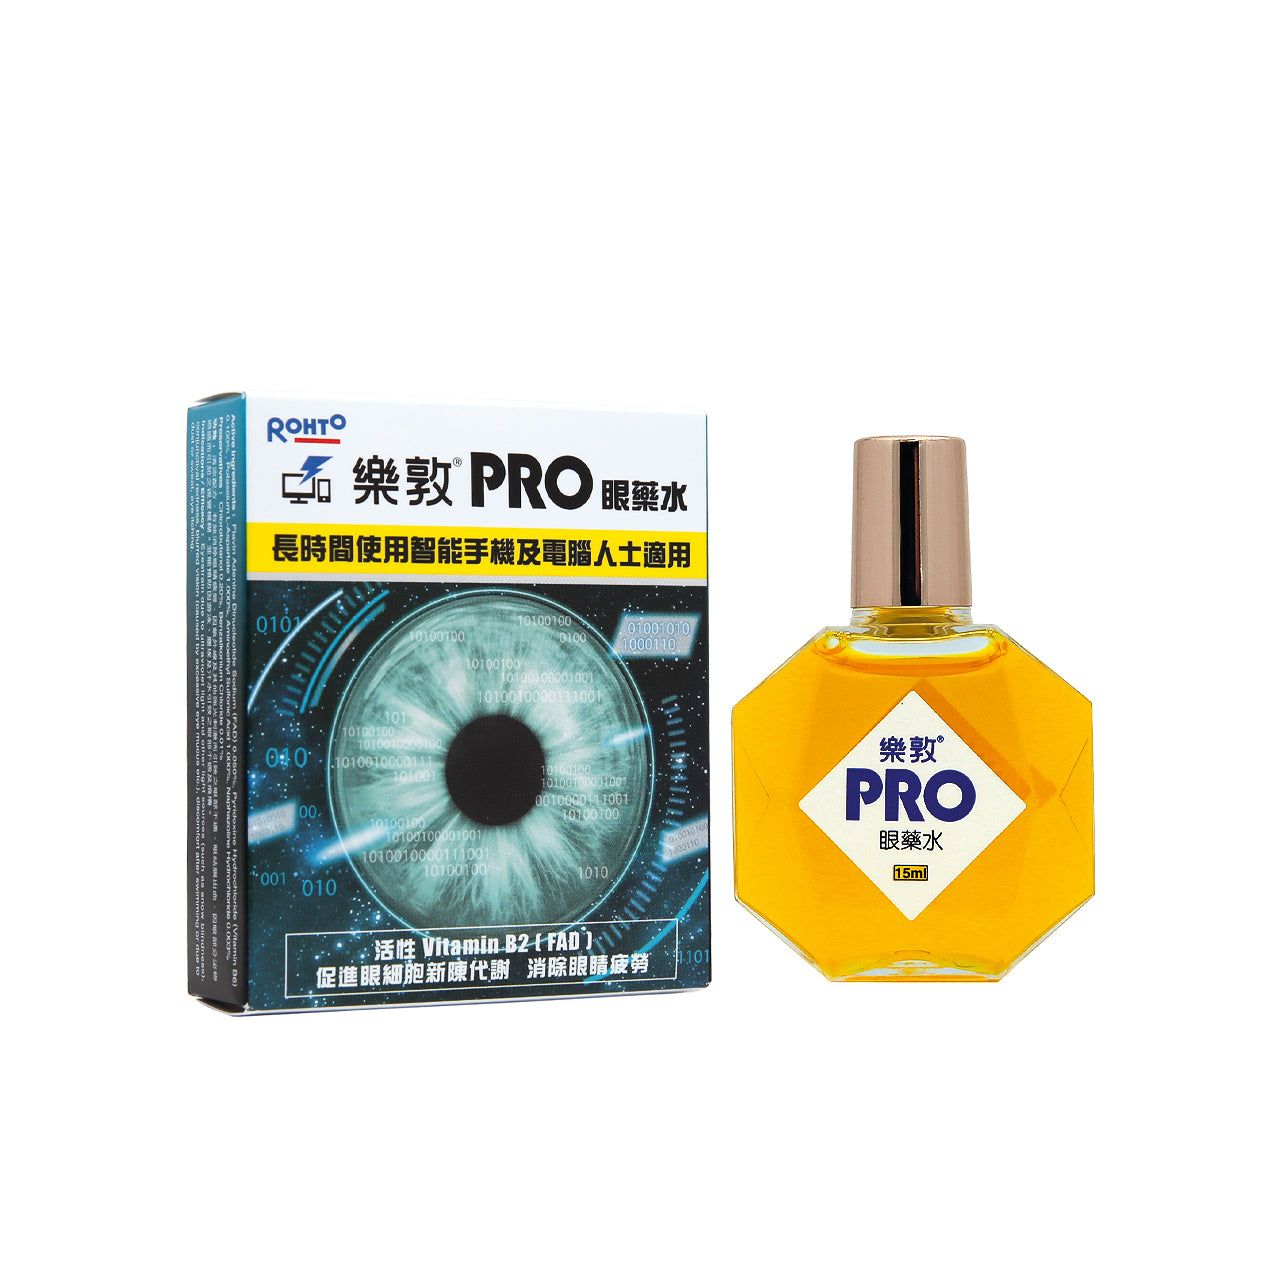 Rohto Pro Eye Drops 15ML | Sasa Global eShop